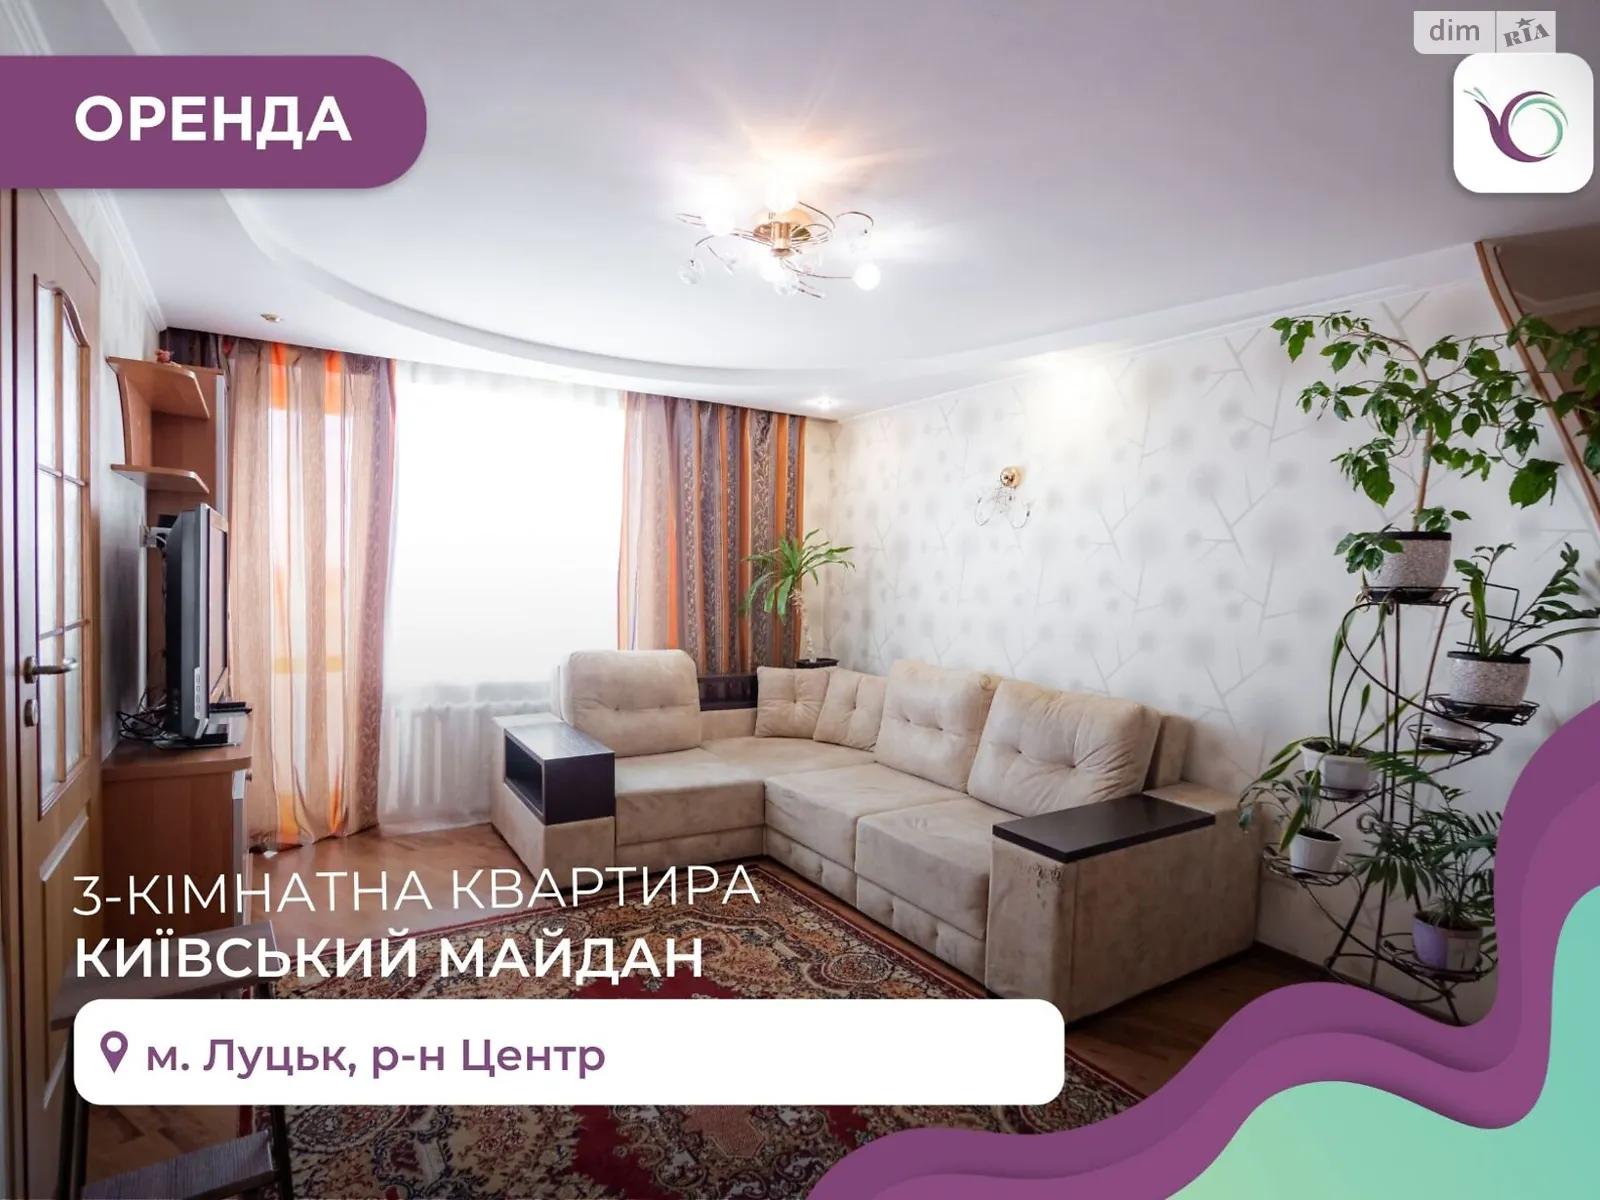 3-комнатная квартира 59 кв. м в Луцке, Киевская майд. - фото 1